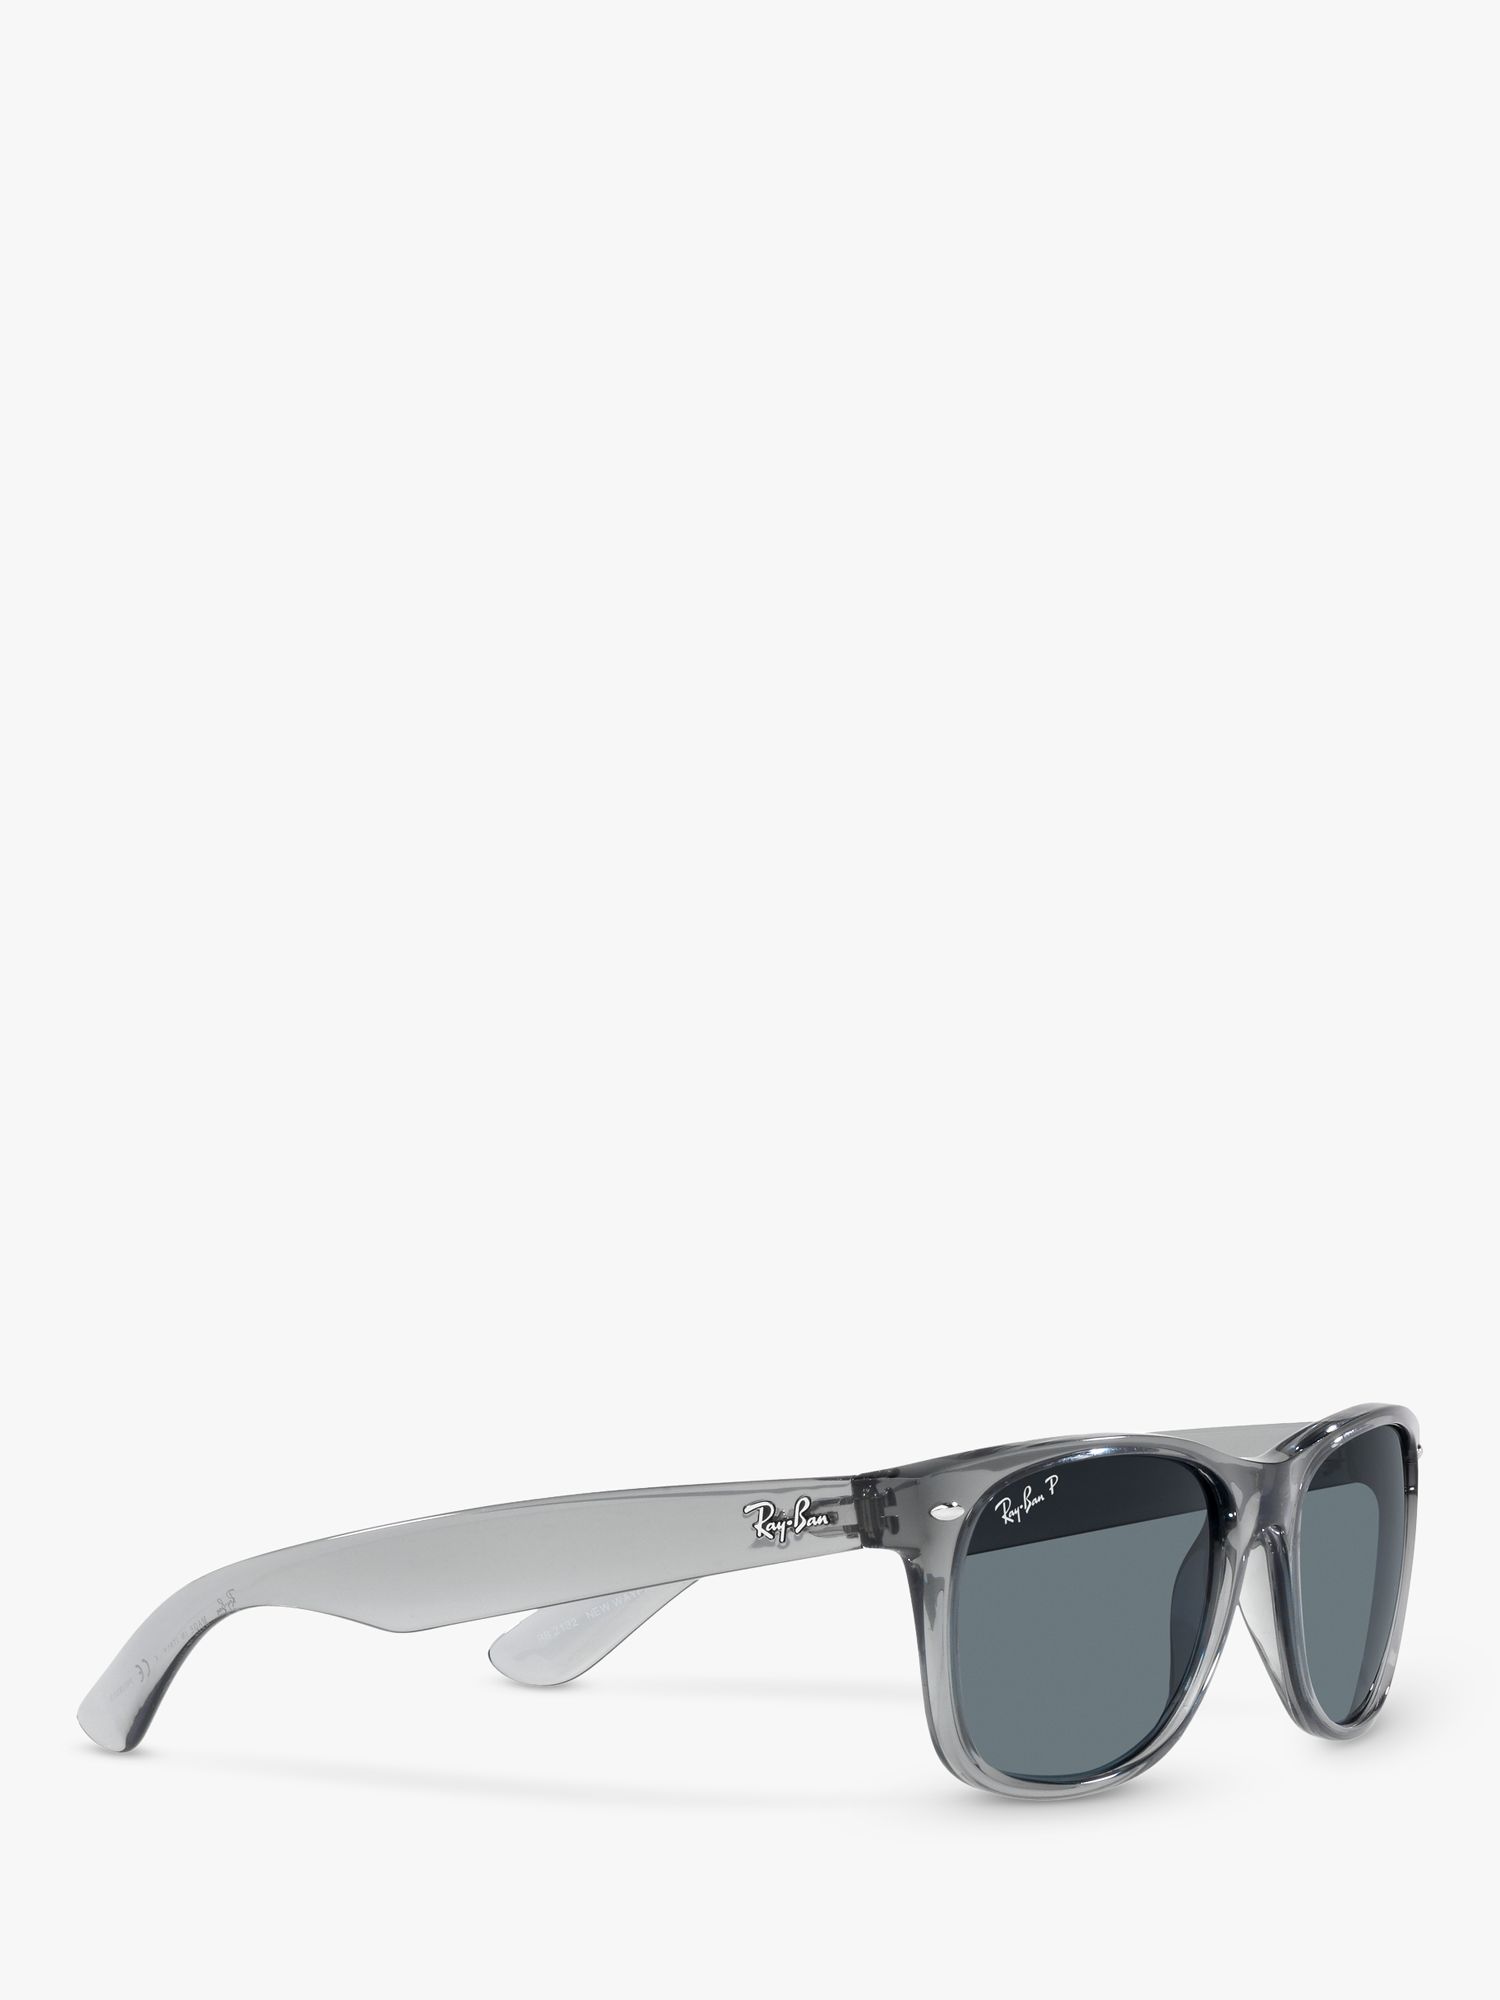 Ray Ban Rb2132 Unisex New Wayfarer Polarised Sunglasses Transparent Grey Blue At John Lewis Partners